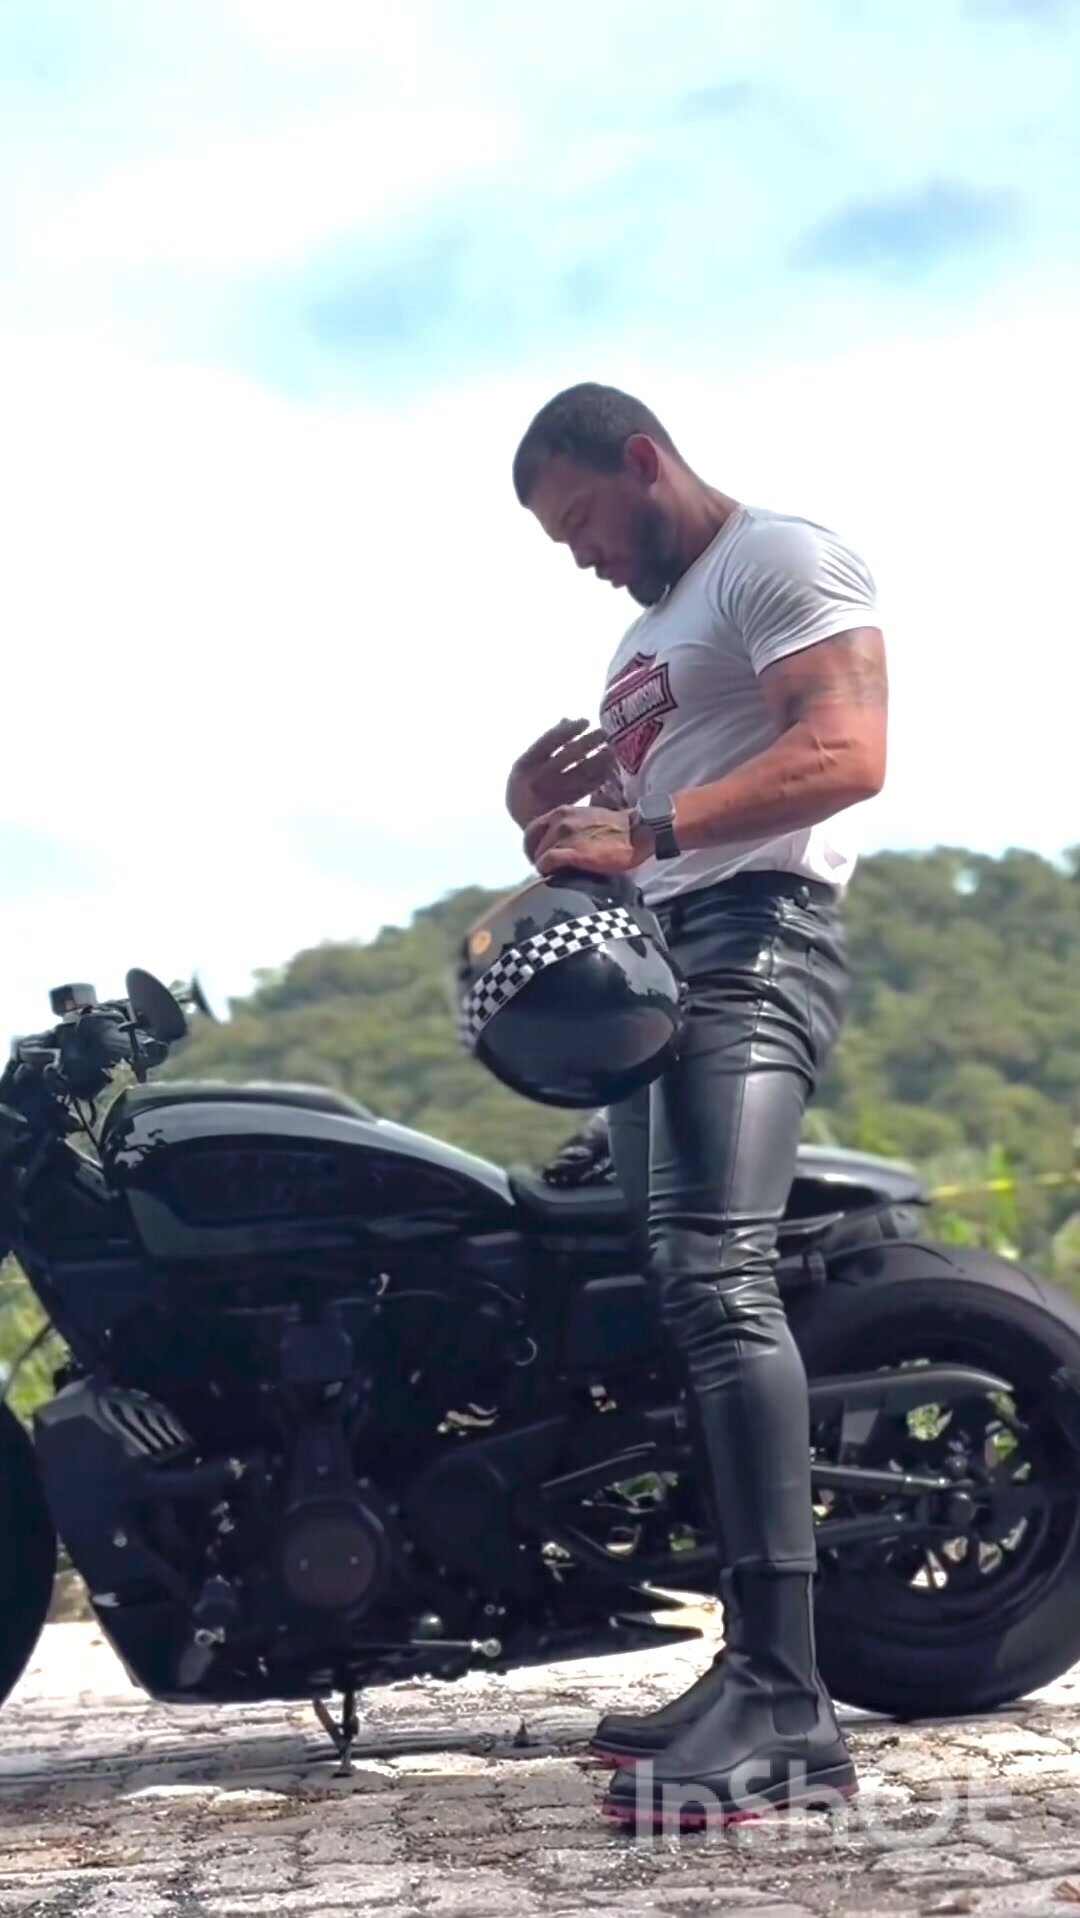 Sexy leather biker